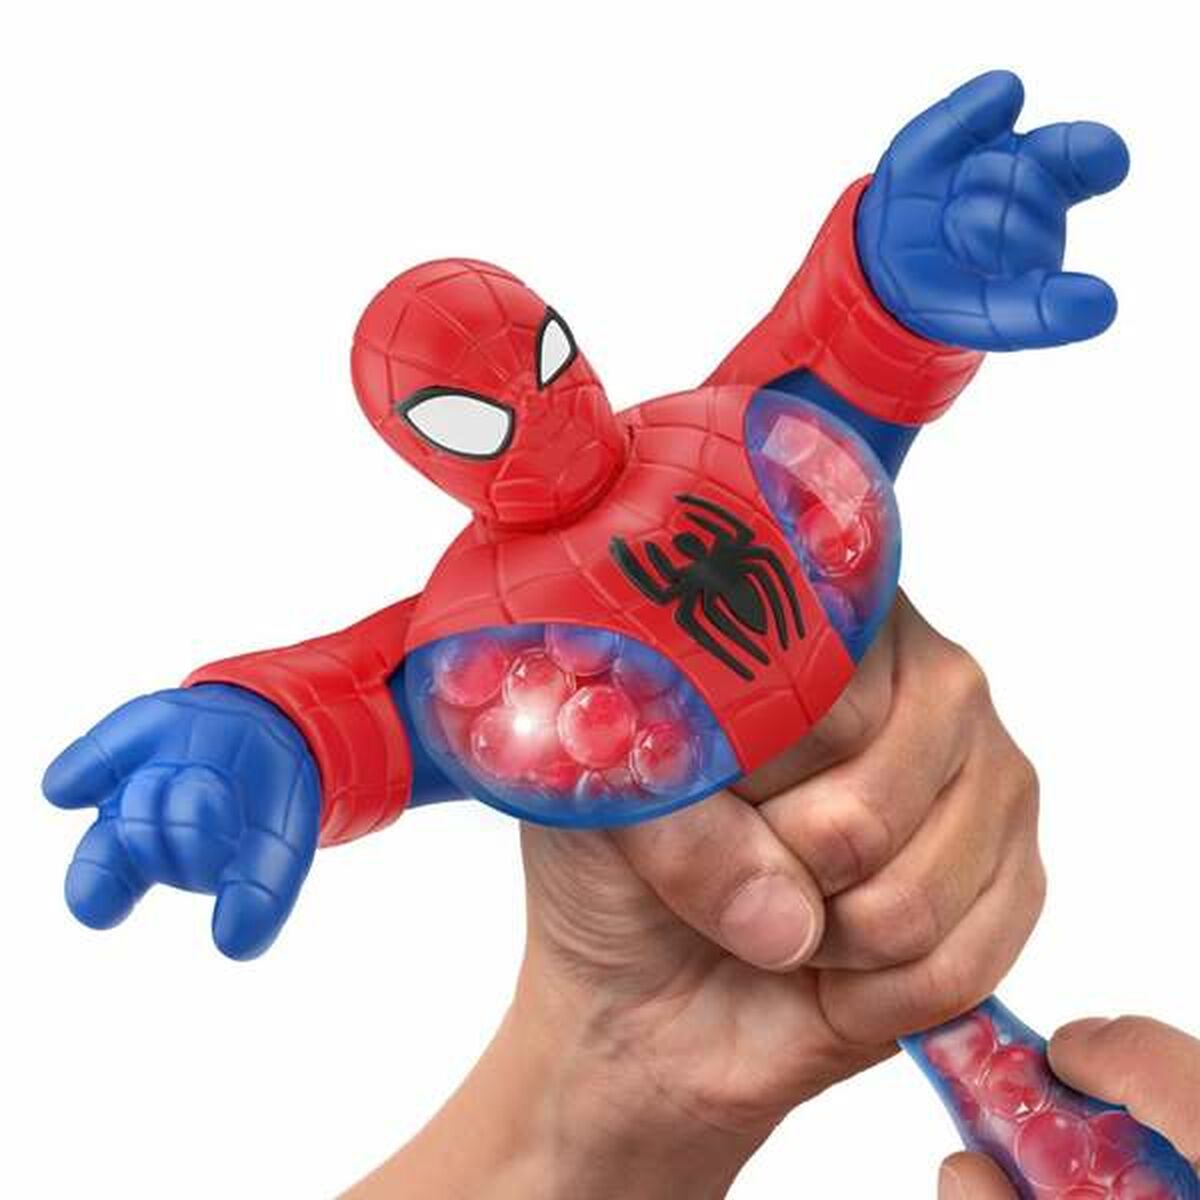 Actionfigurer Marvel Goo Jit Zu Spiderman 11 cm-Leksaker och spel, Dockor och actionfigurer-Marvel-peaceofhome.se